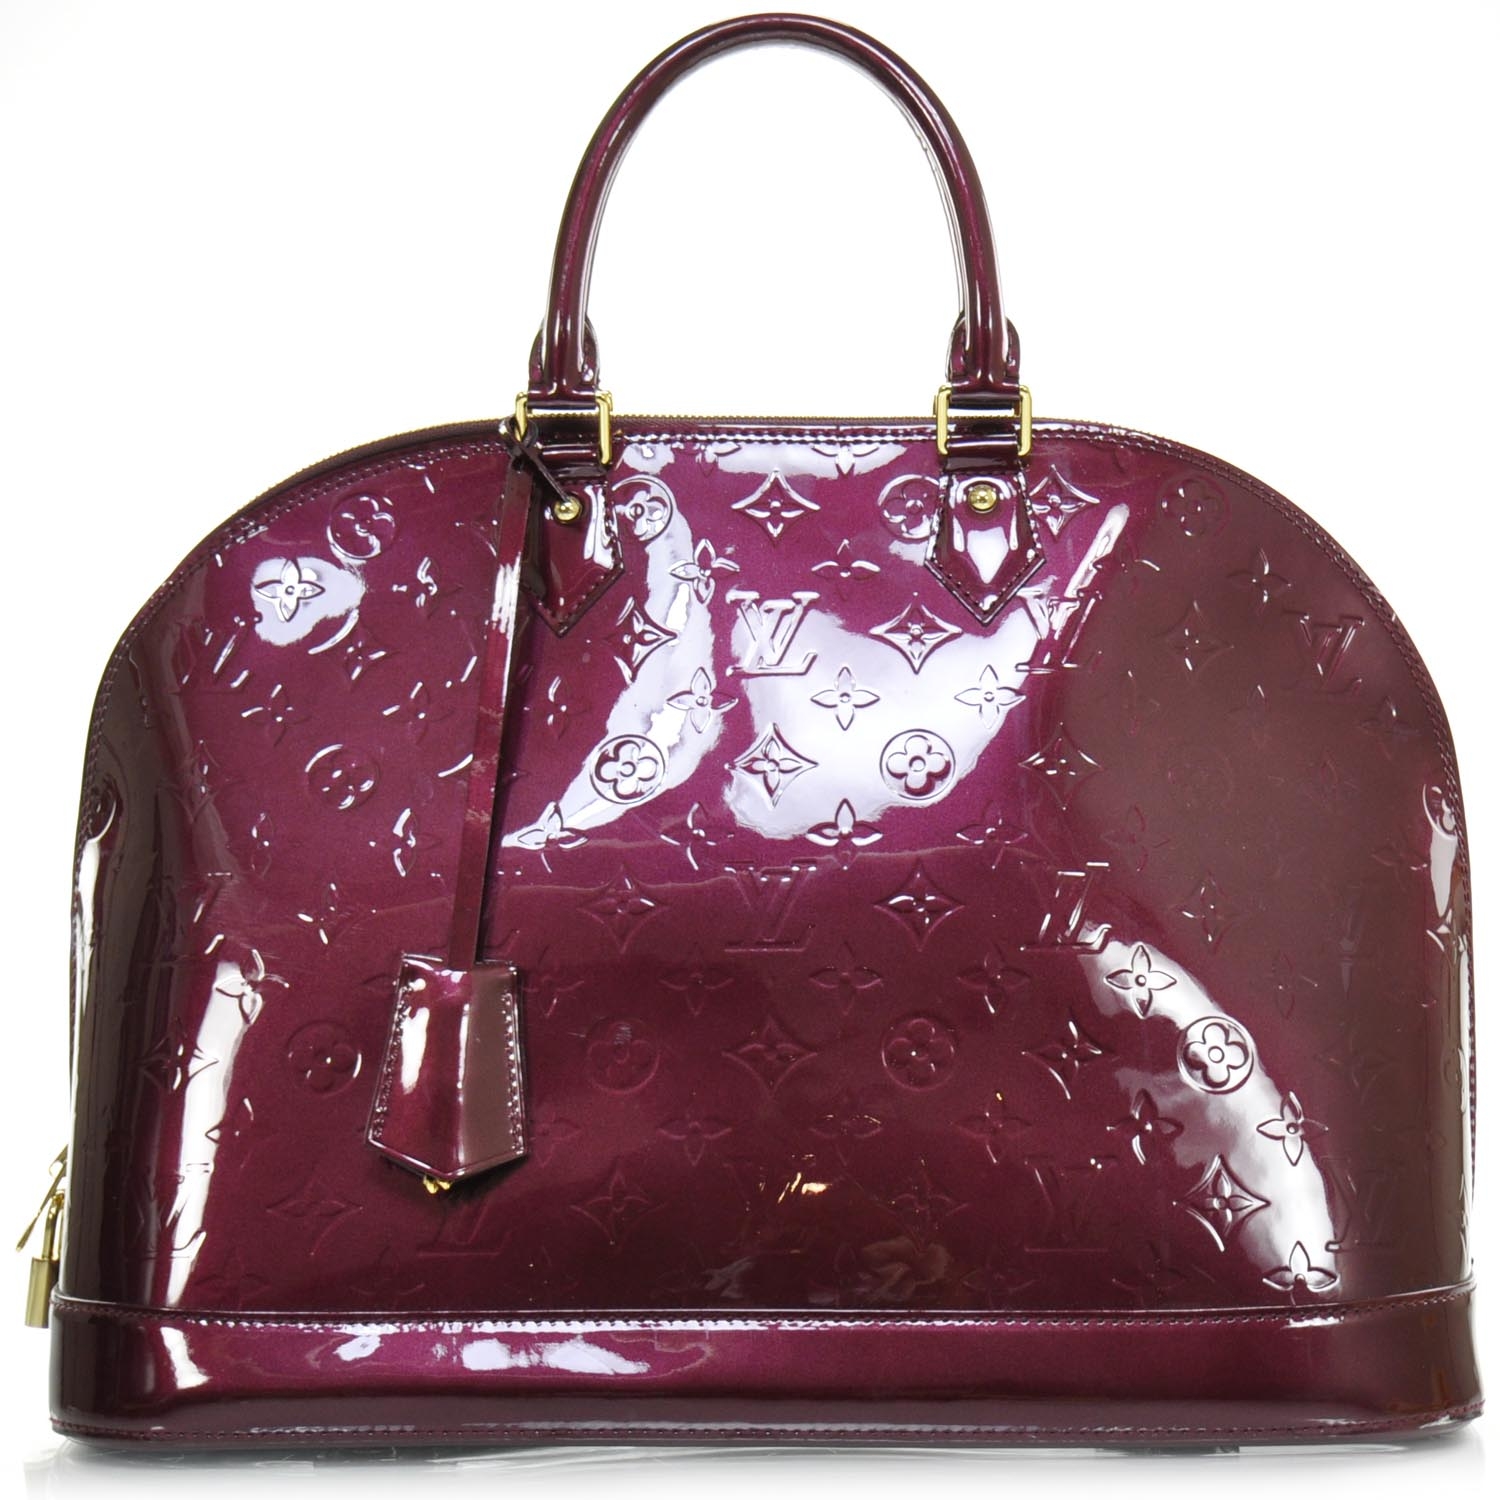 Louis Vuitton Rouge Fauviste Vernis Wilshire Pm Bag' In Burgundy